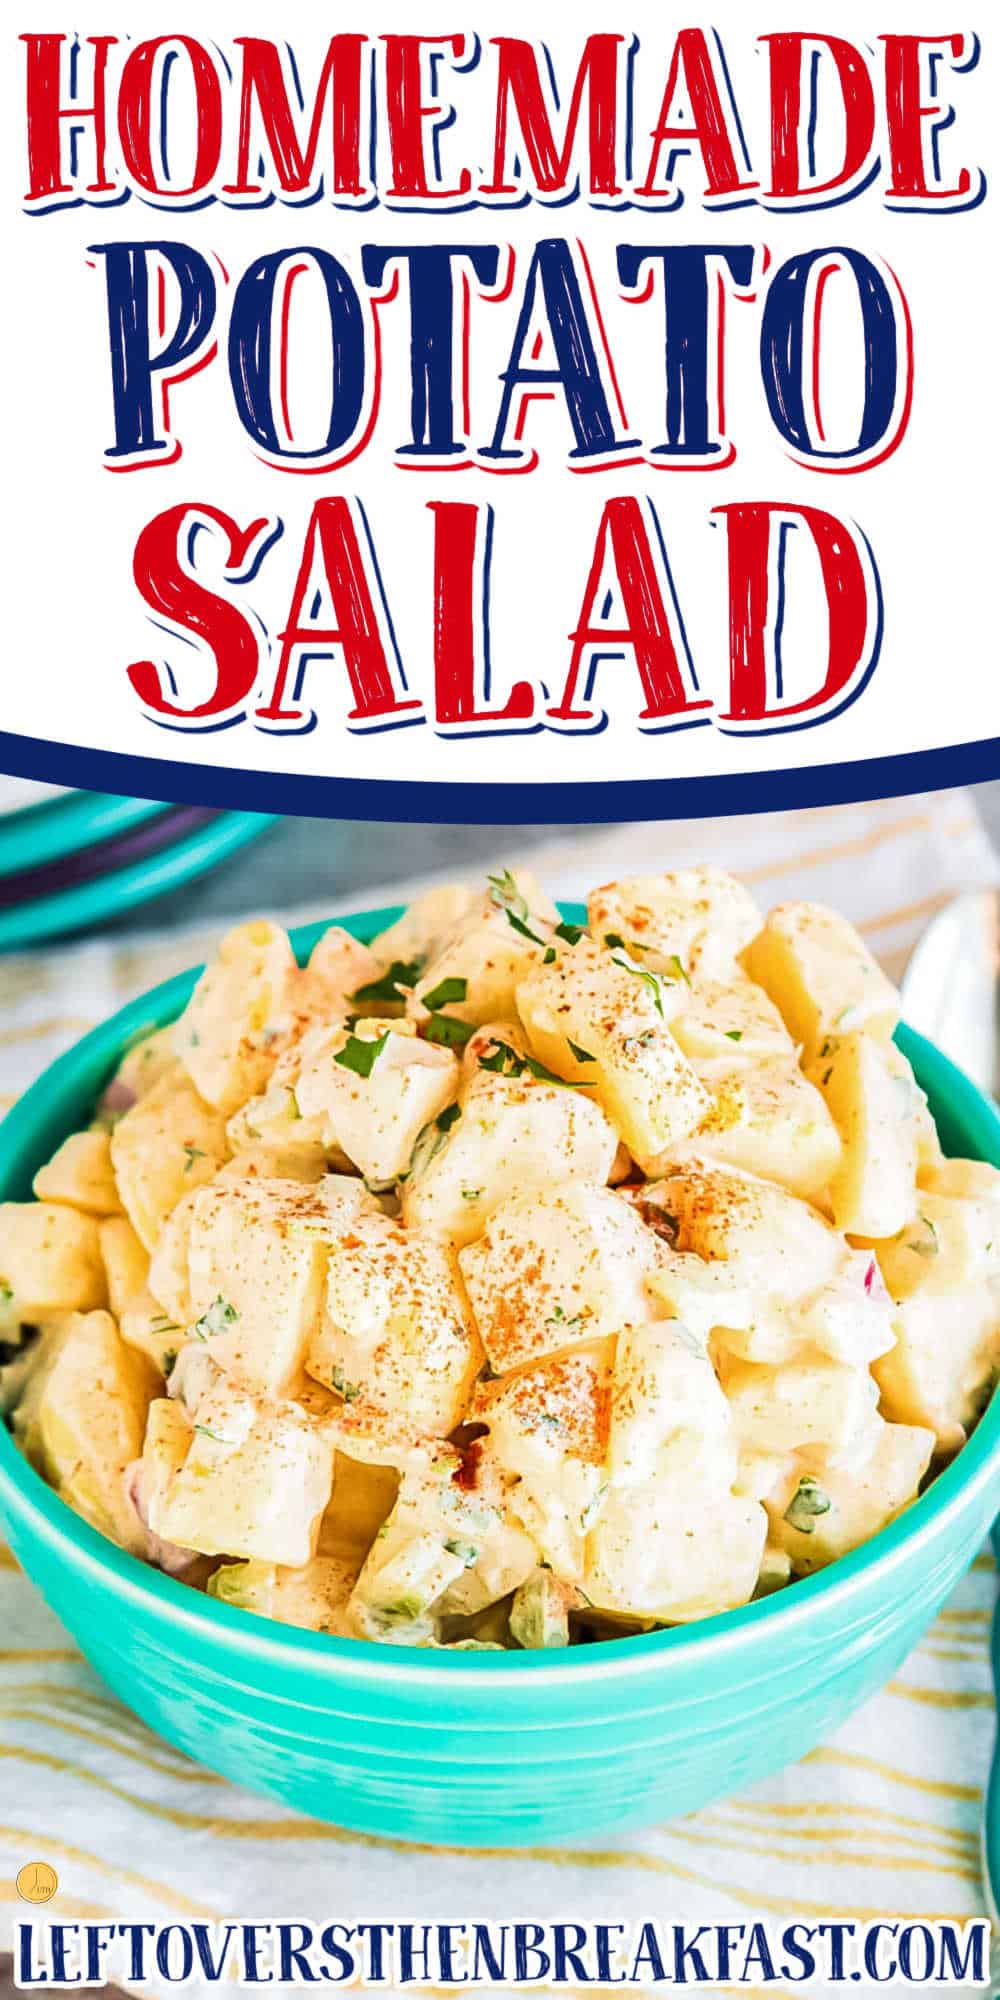 spoon of potato with text "the best potato salad"